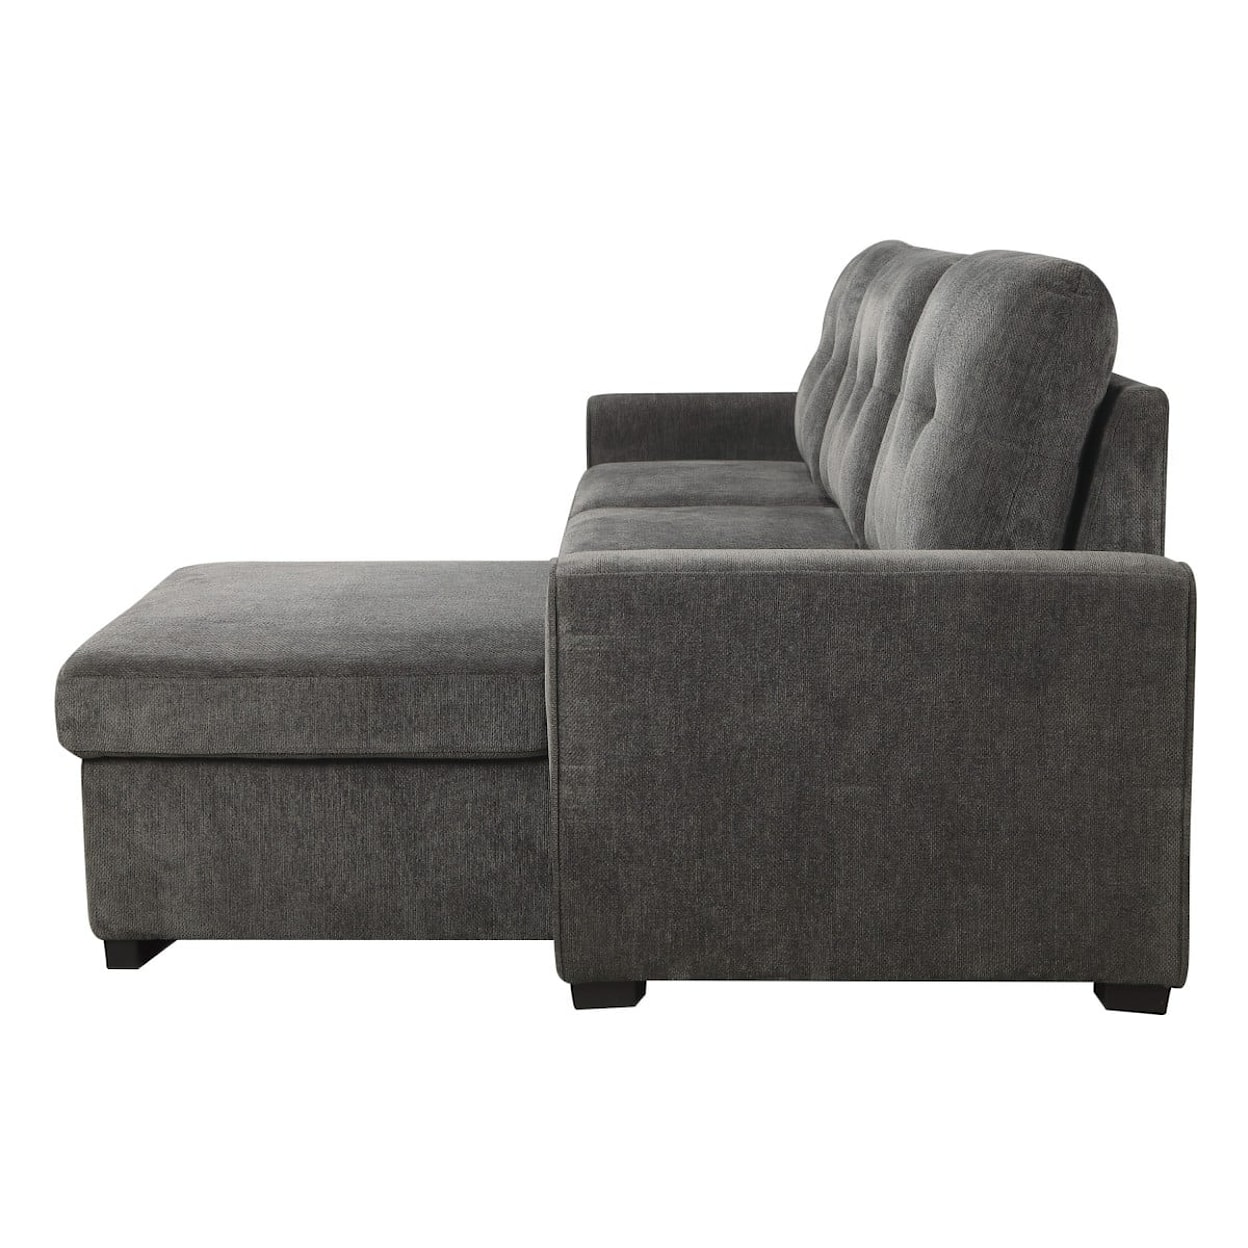 Homelegance Carolina 2-Piece Reversible Sectional Sofa